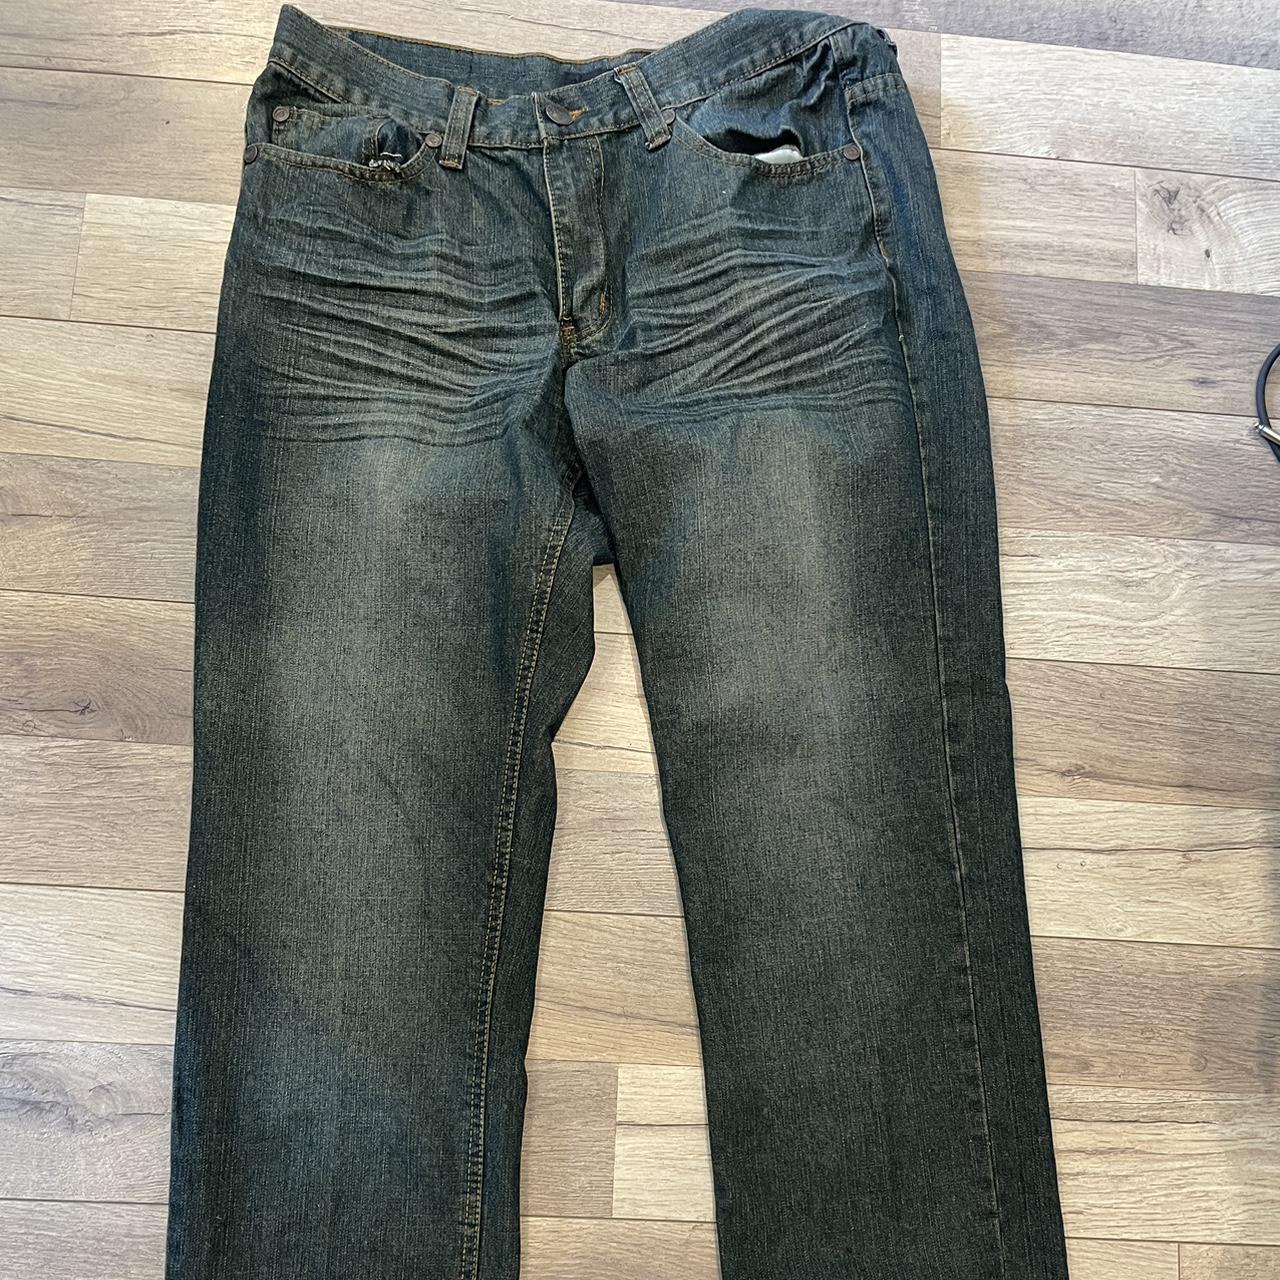 Nostic y2k baggy jeans. Great wash. 36x30 #y2k... - Depop